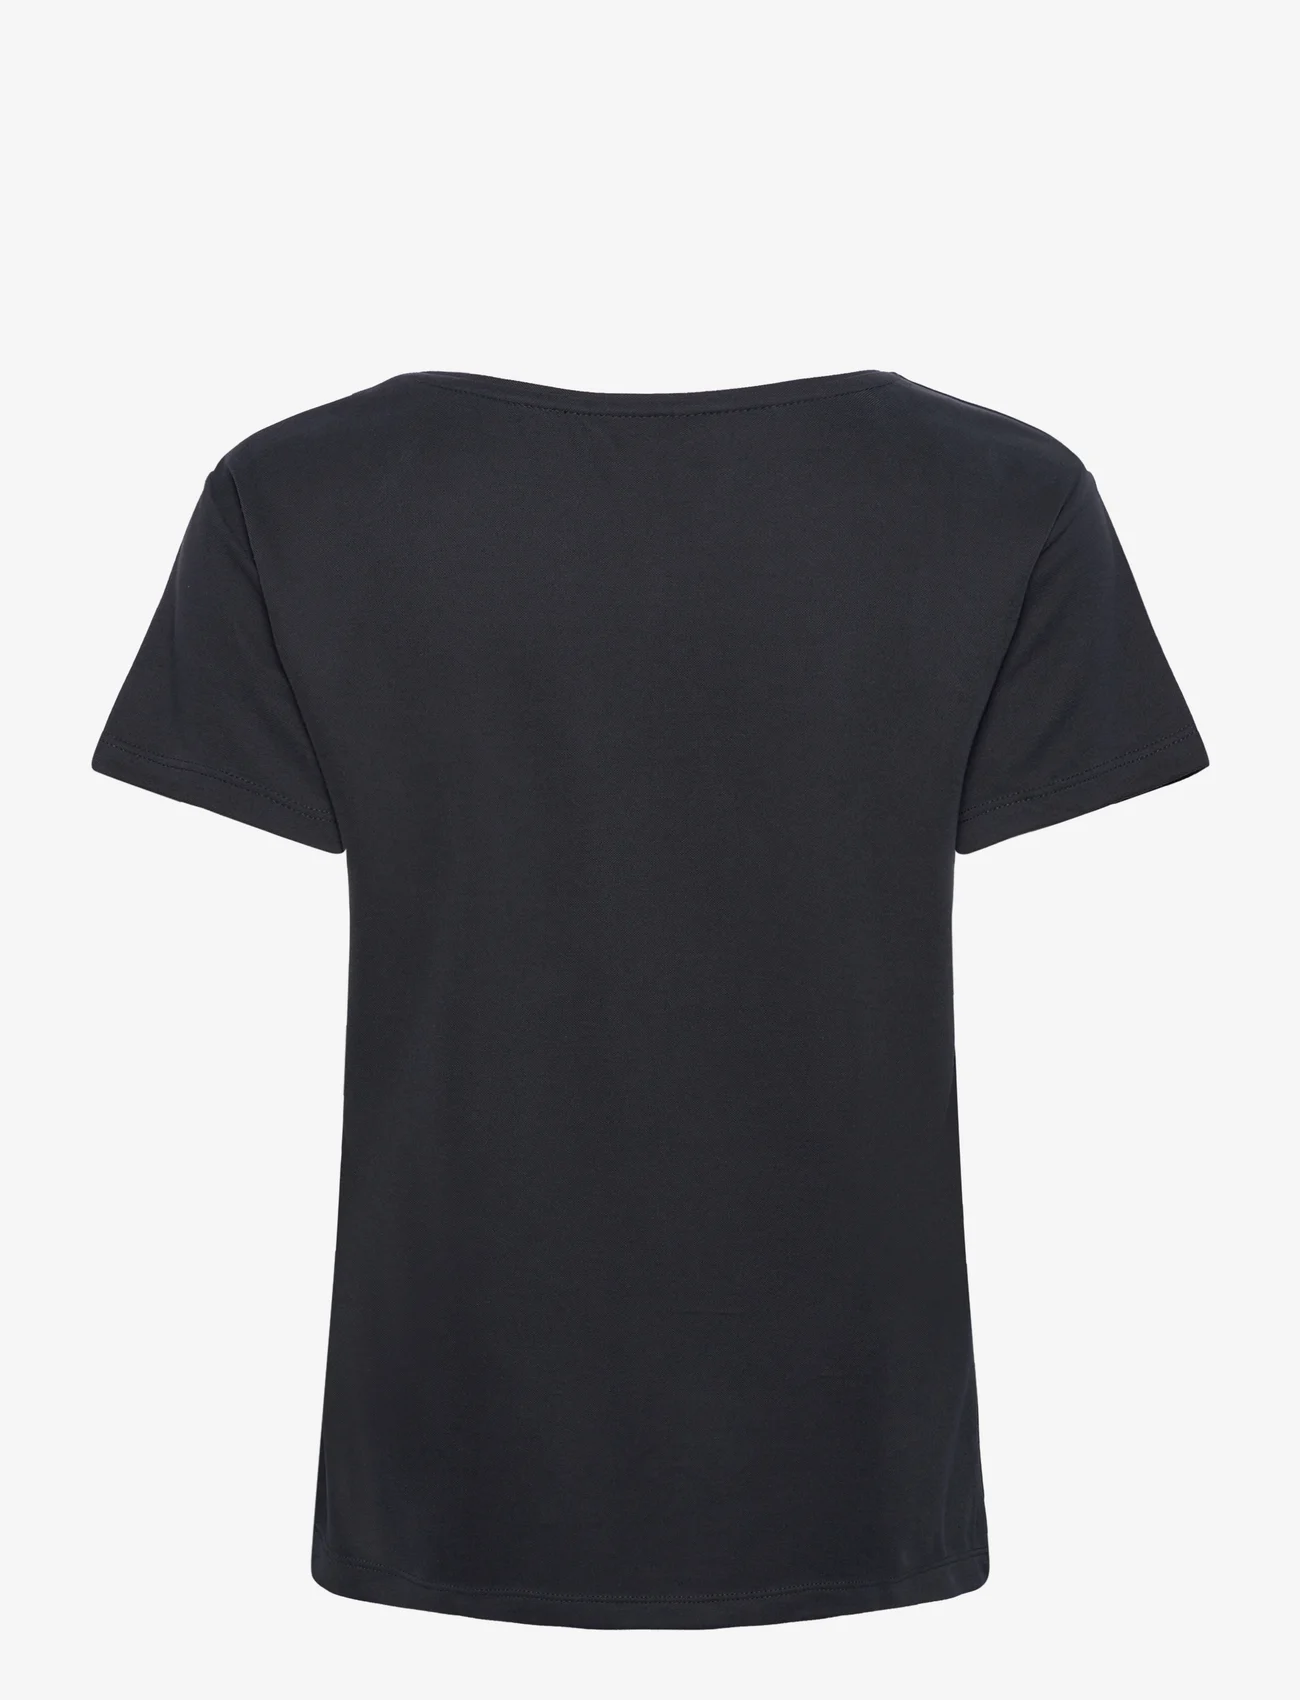 mbyM - Luvanna-M - t-skjorter - black - 1